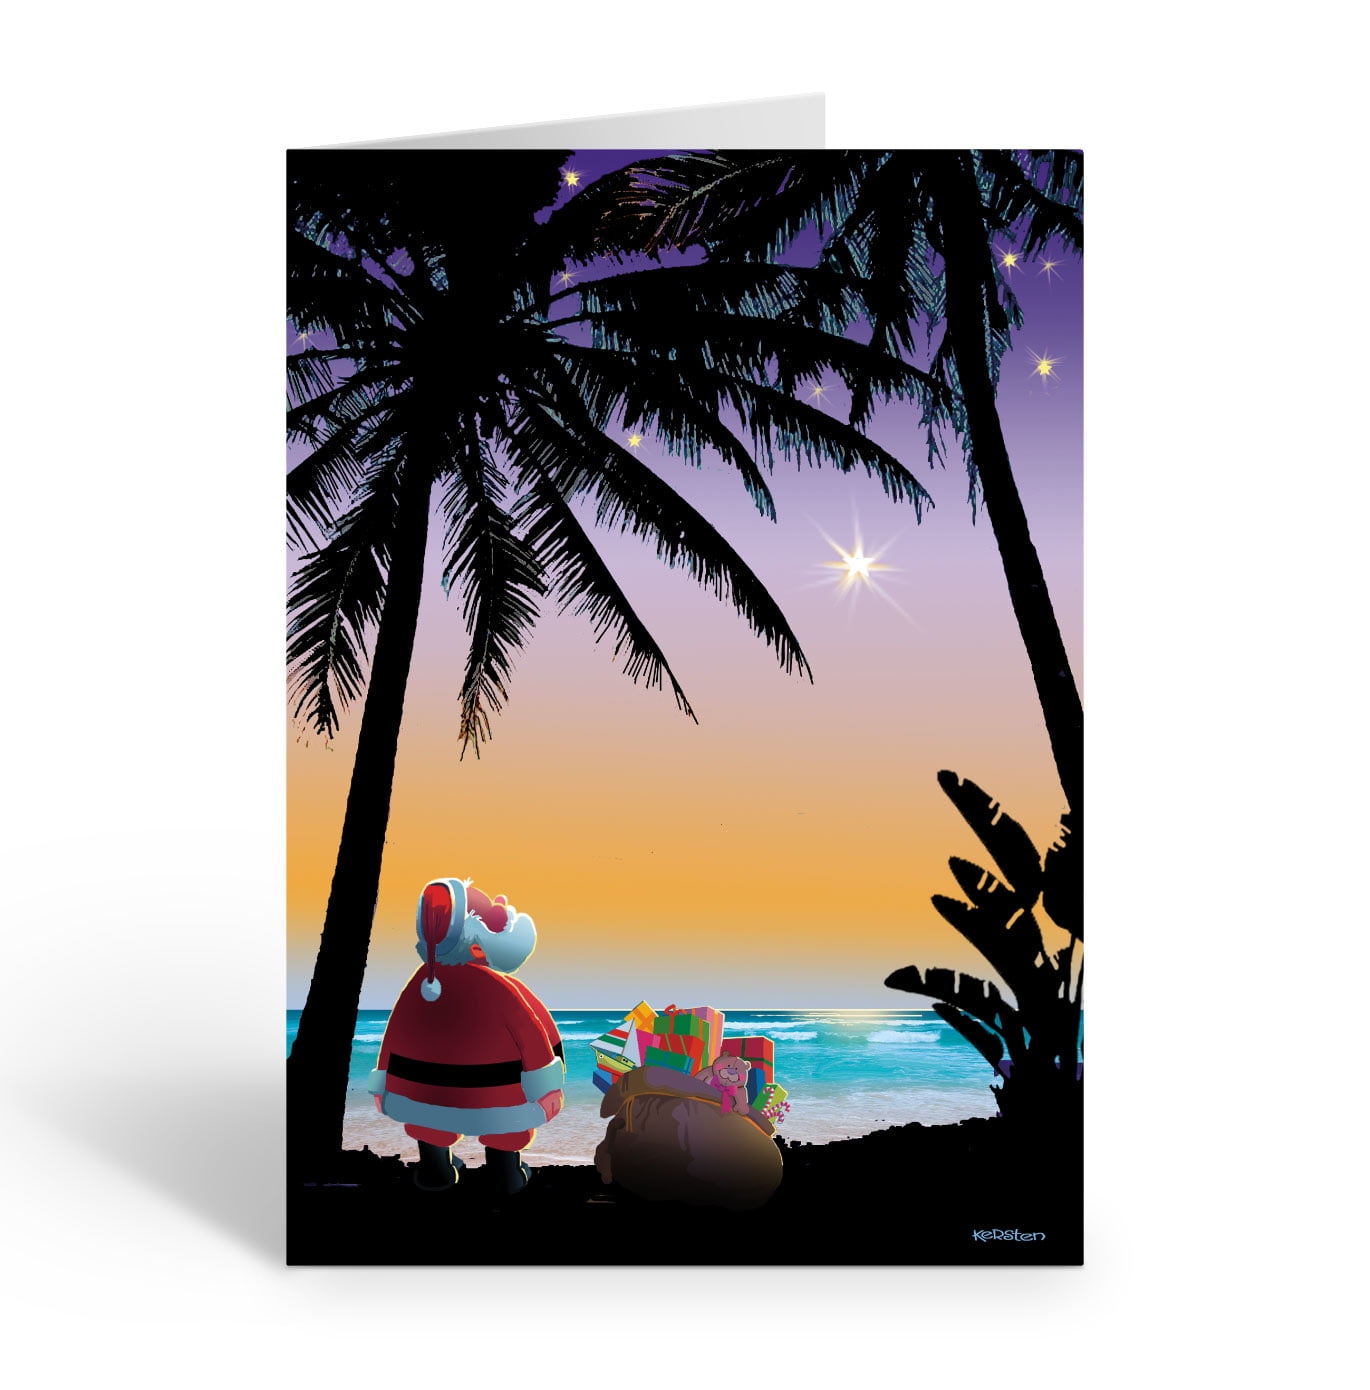 Tropical Christmas Cards - Tropical Dreams Christmas Card - Beach Christmas Card - 30069